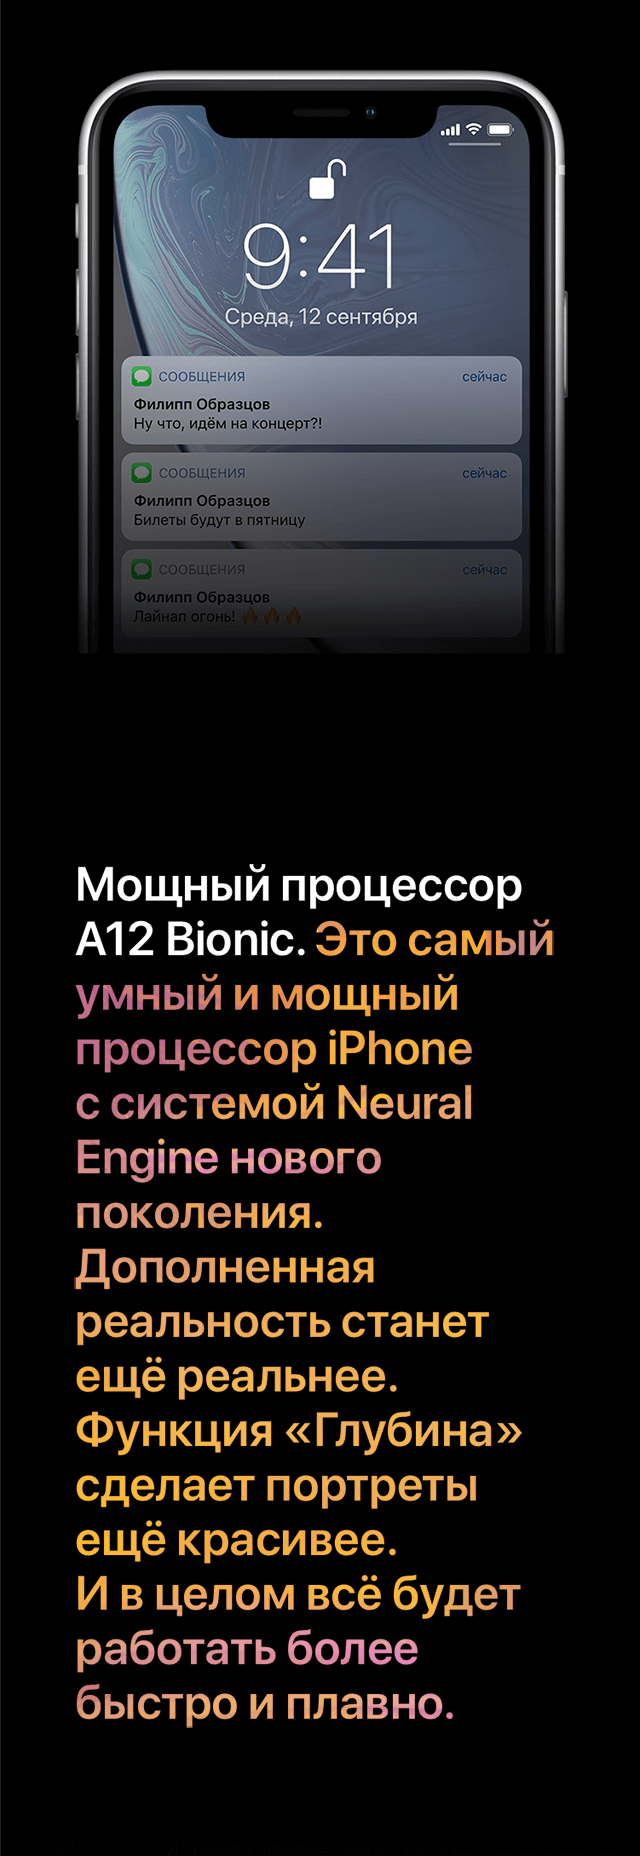 IPhone XR - Москва